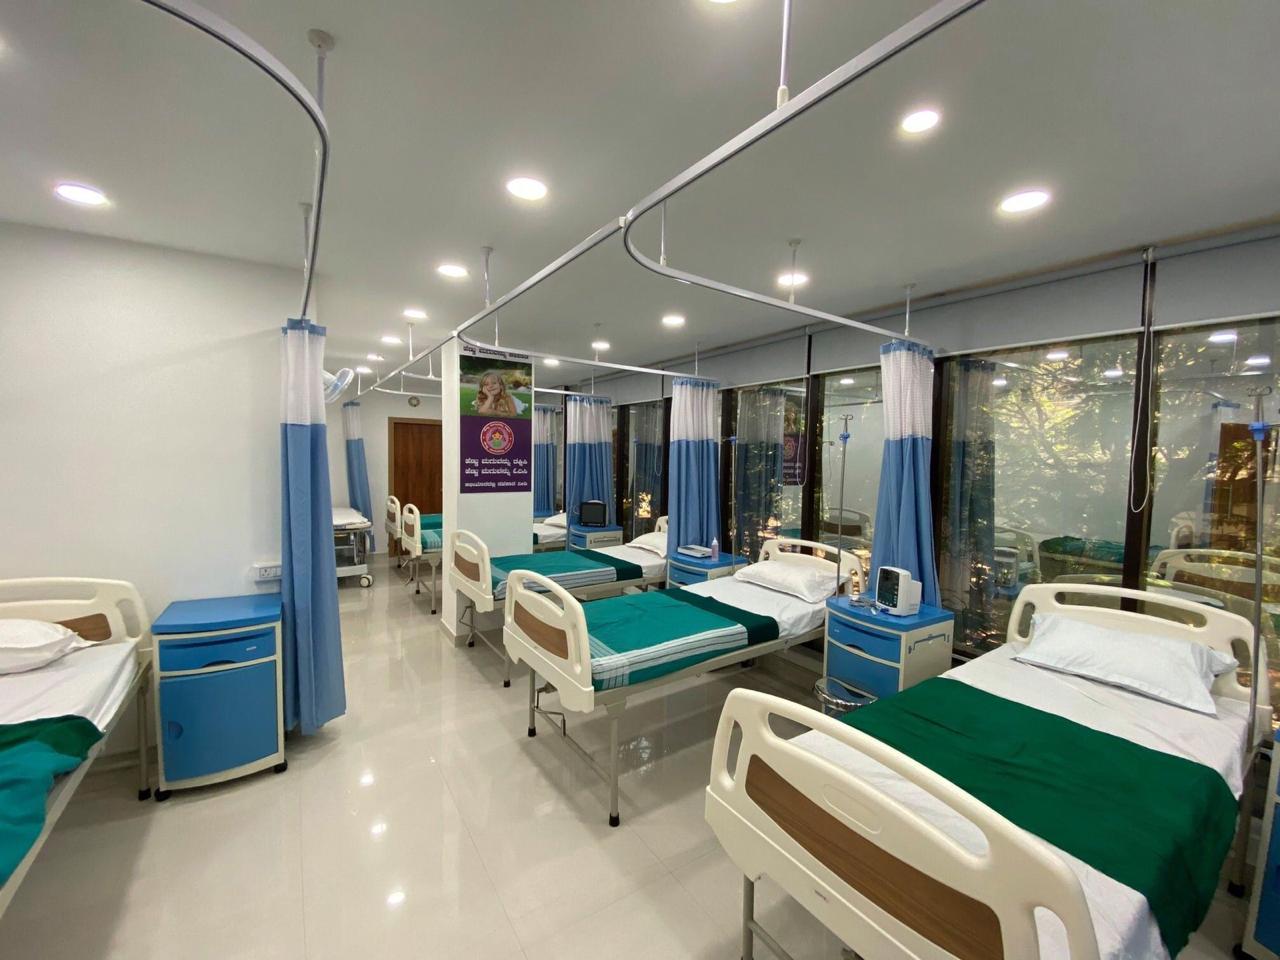 Parency IVF Hospital